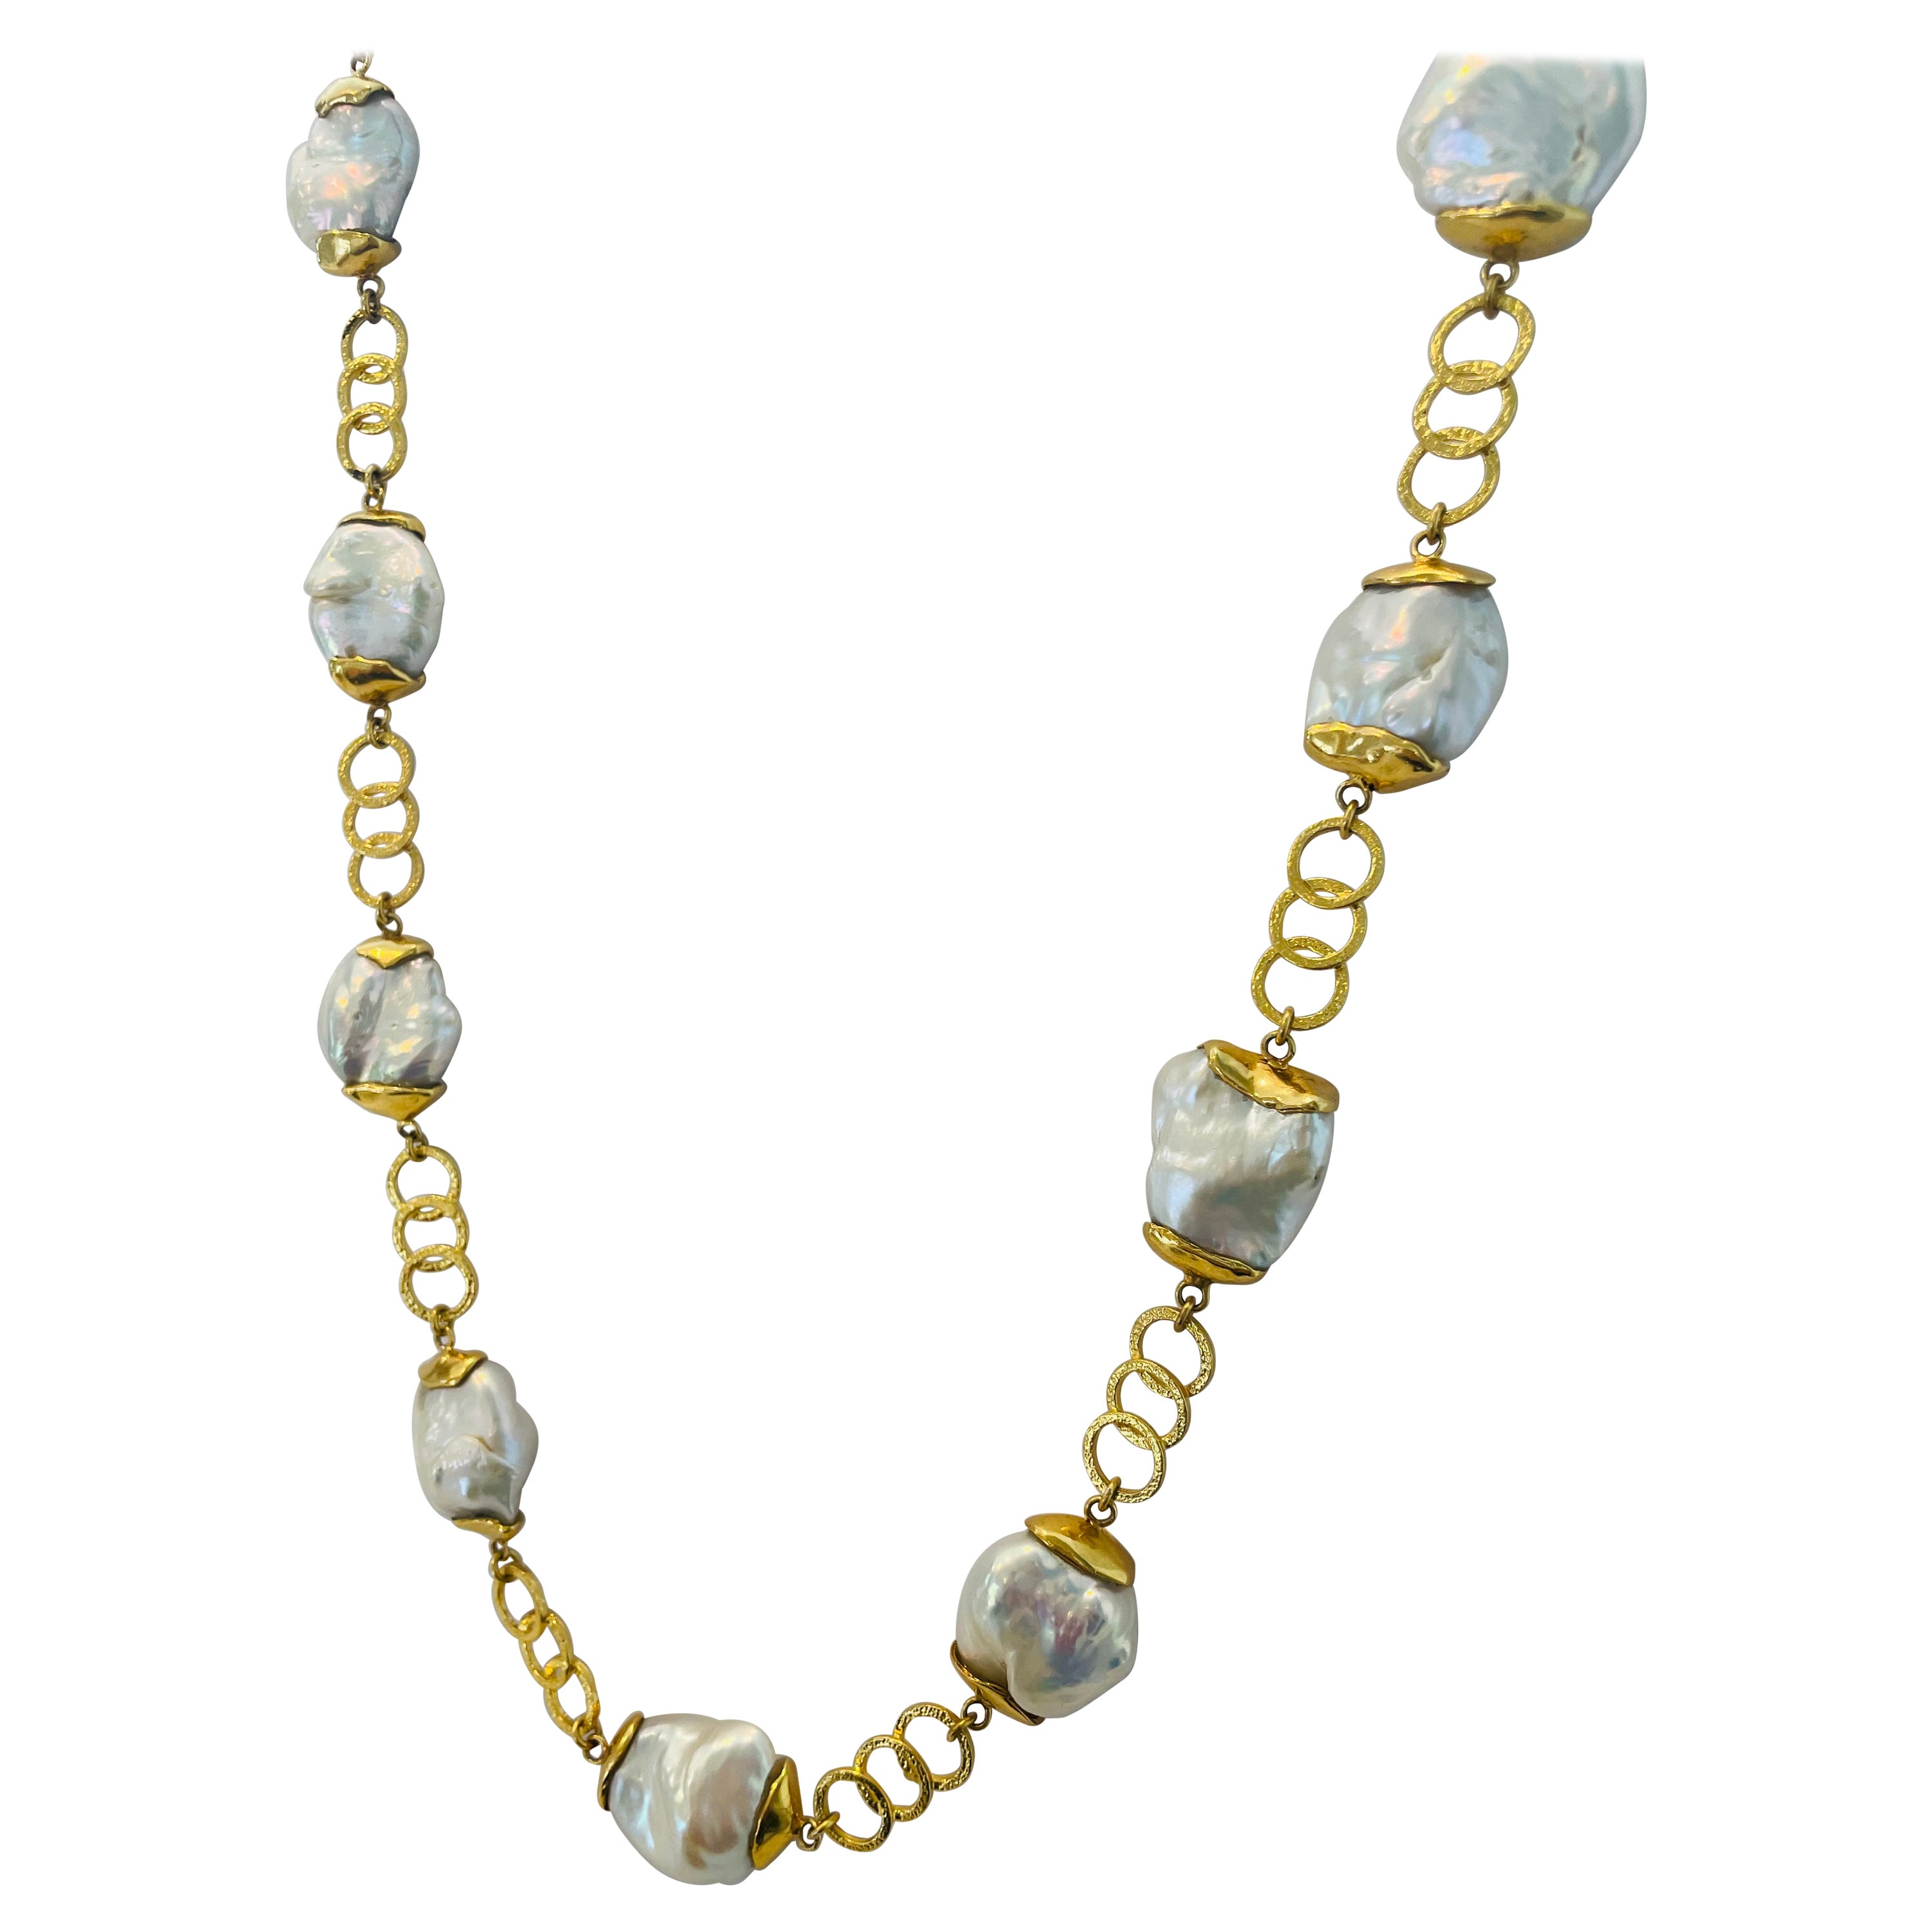 Collier en or 22 carats et perles baroques de Tagili